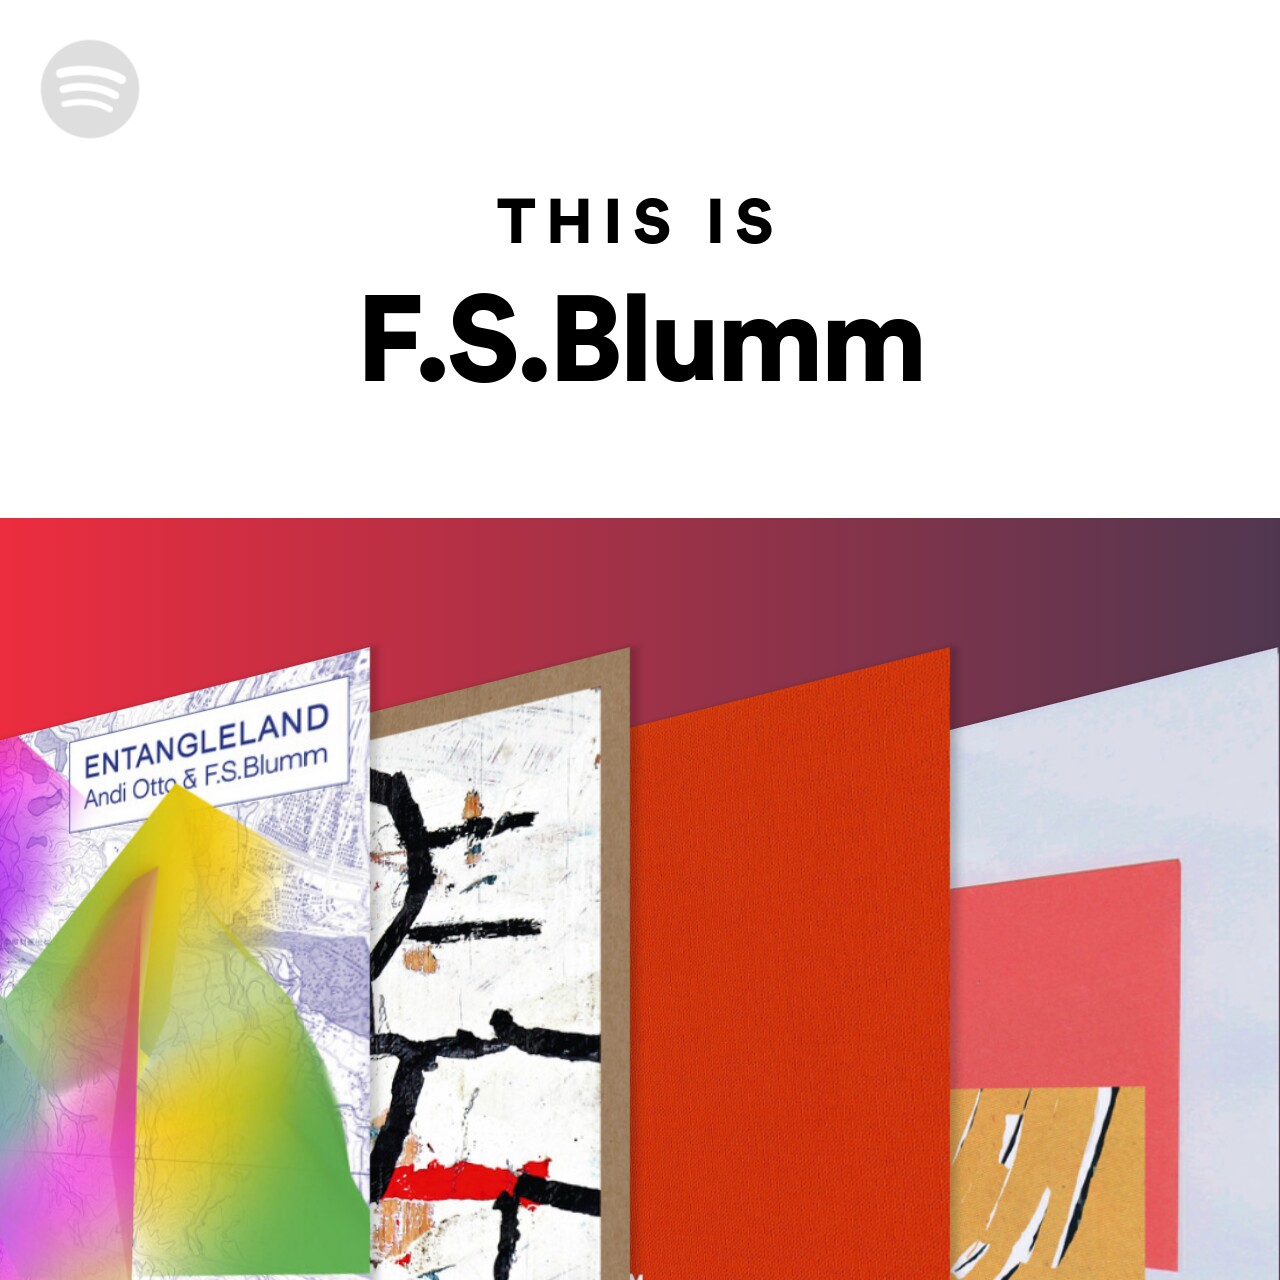 This Is F.S.Blumm